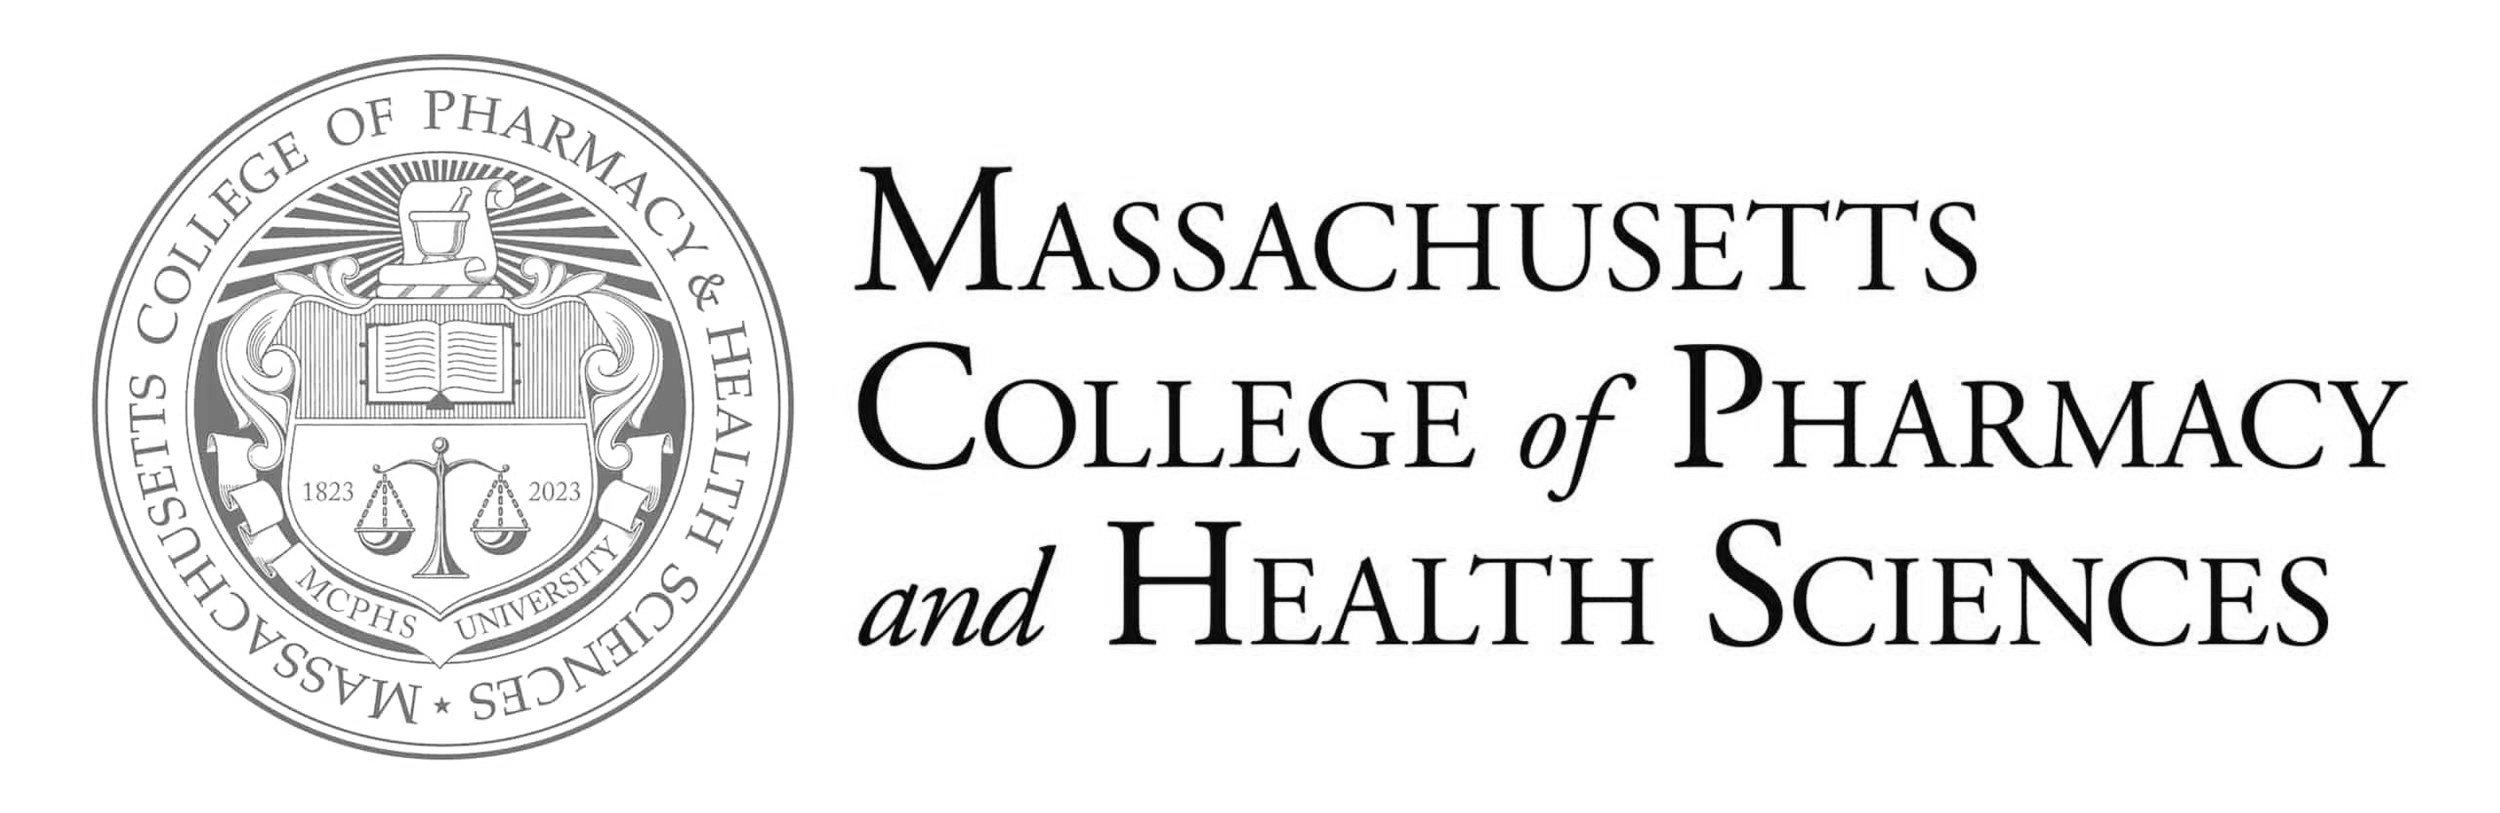 MCPHS_Logo-scaled.jpg